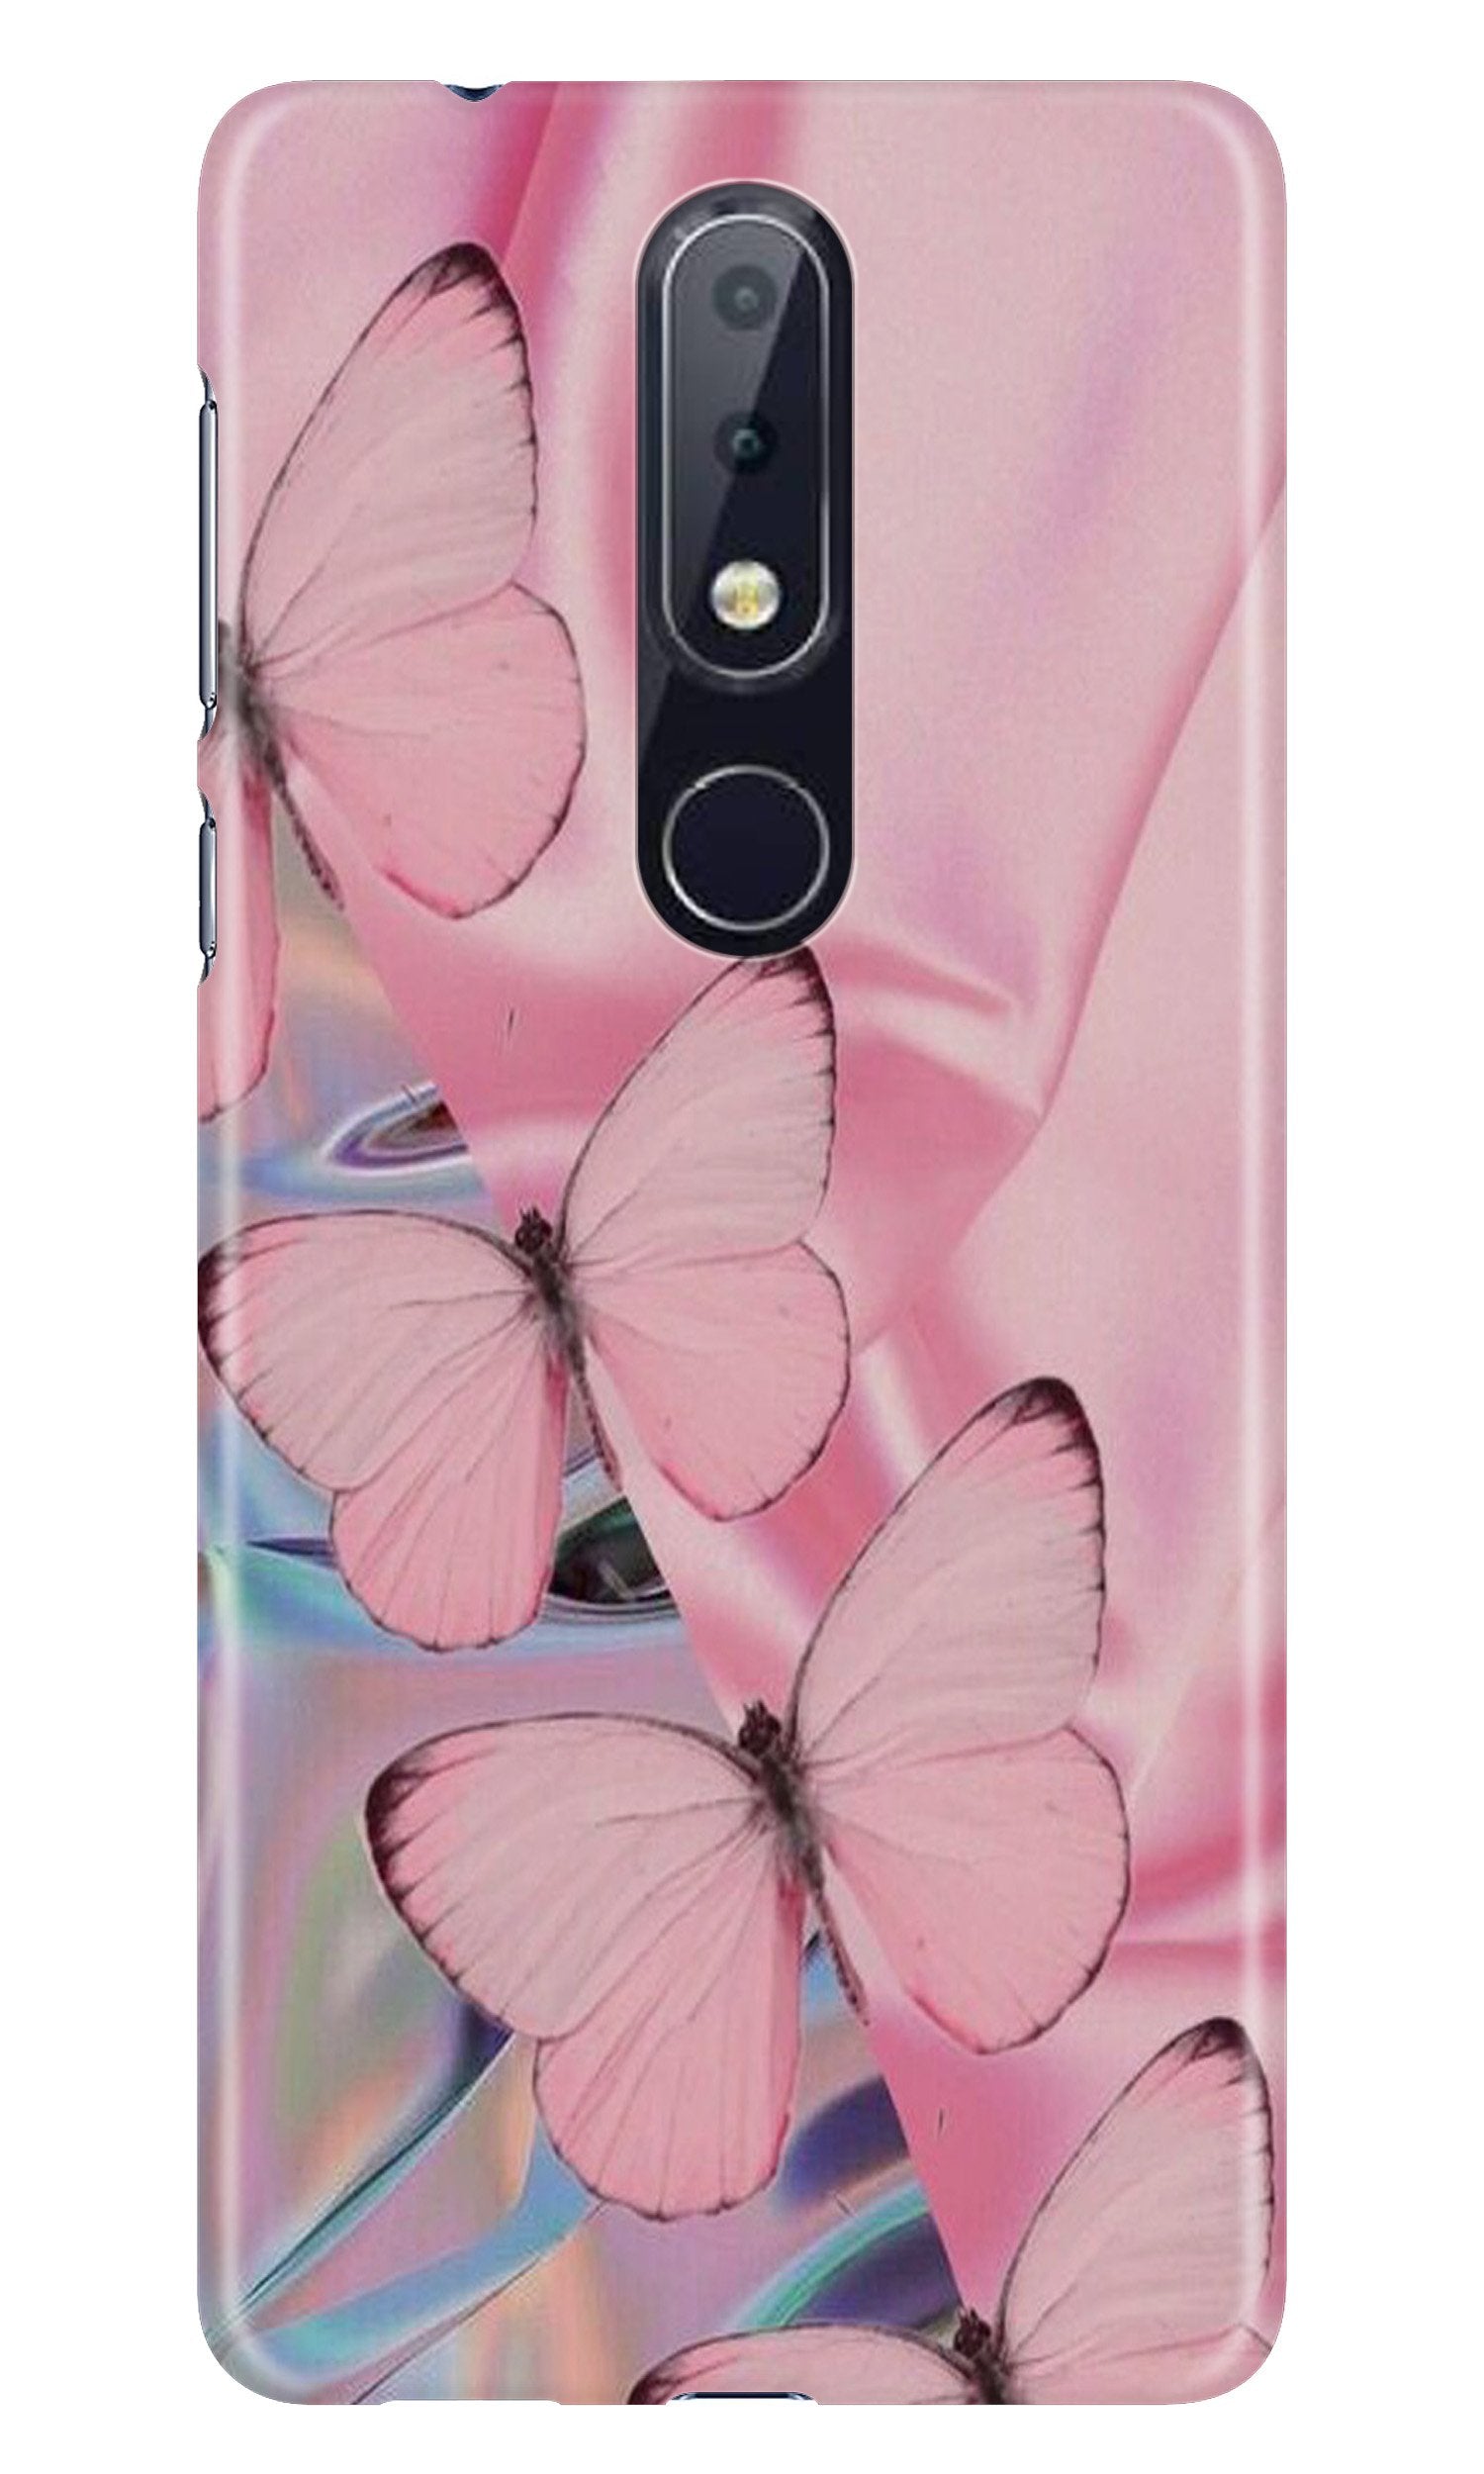 Butterflies Case for Nokia 4.2